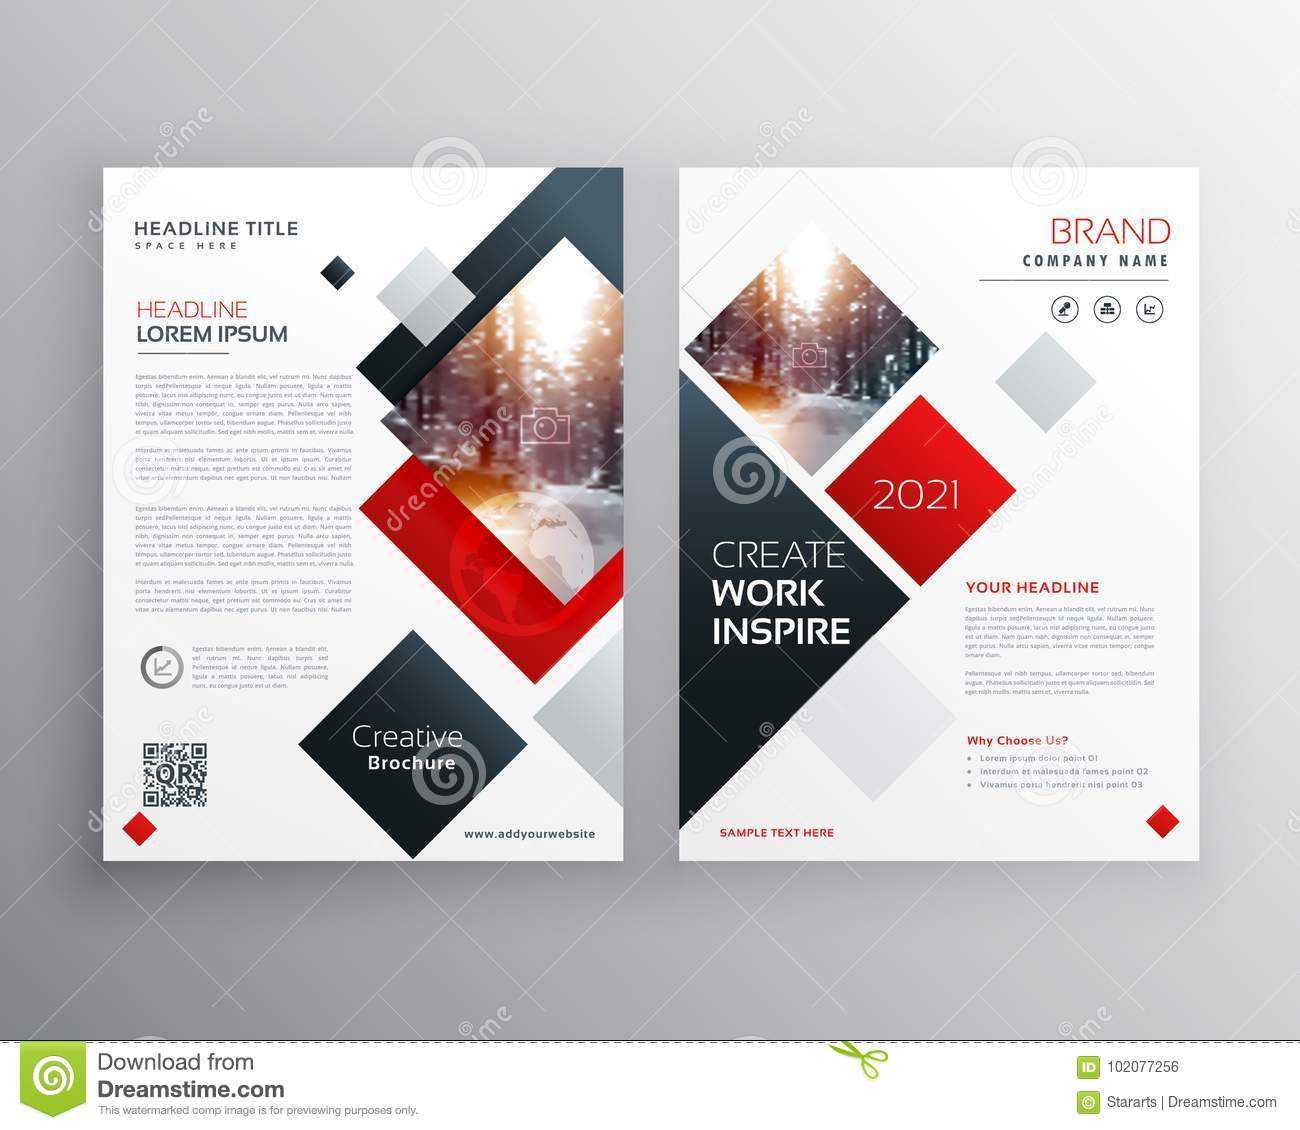 Creative Business Brochure Template Design In Size A4 Stock For Creative Brochure Templates Free Download